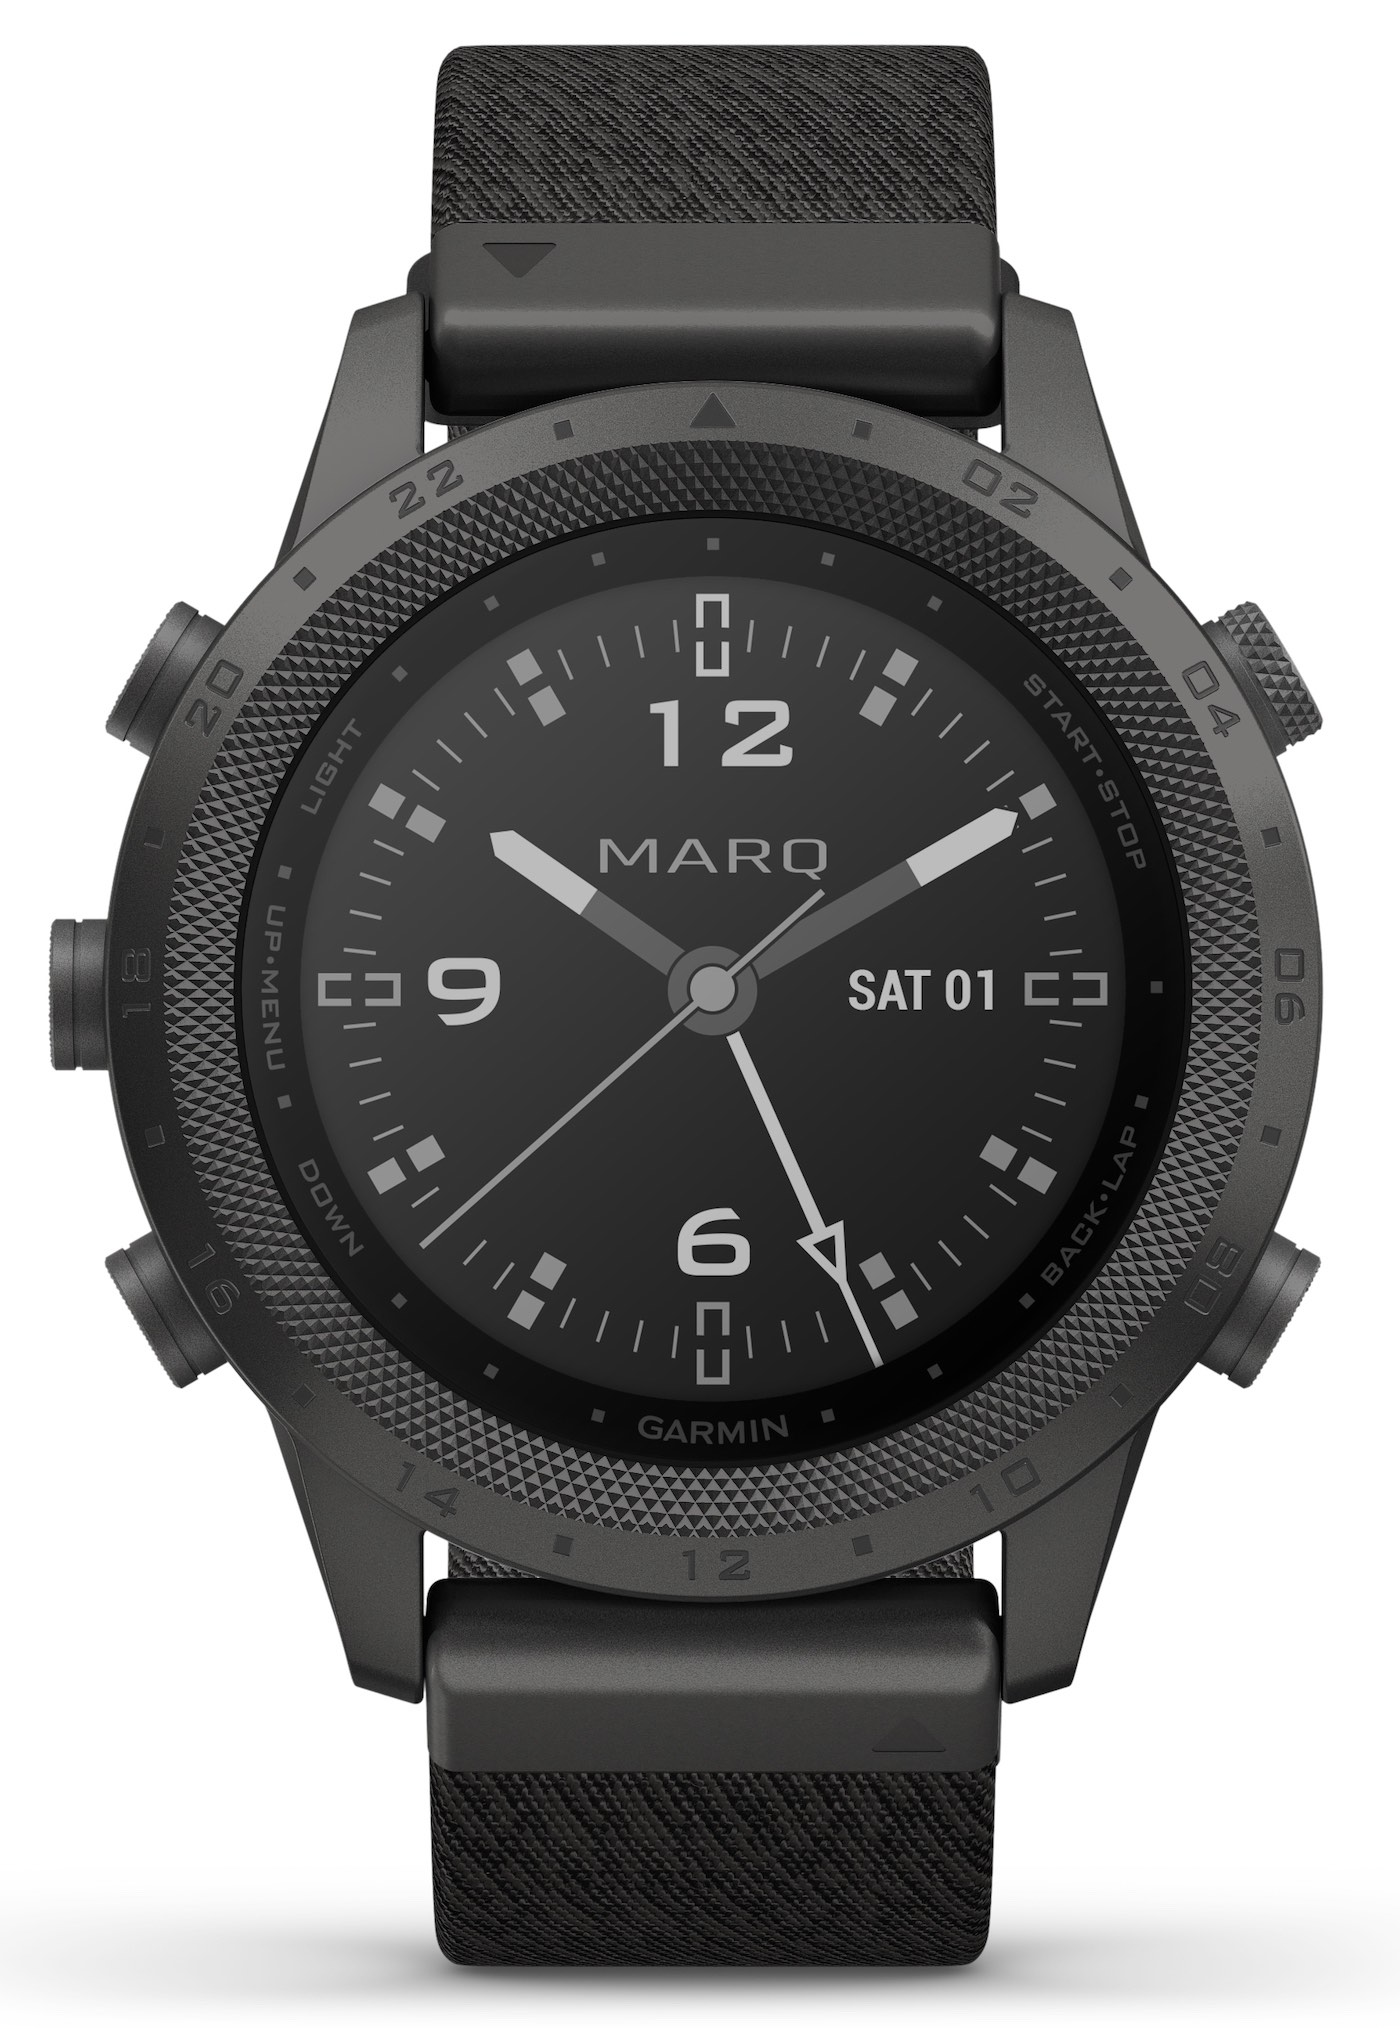 Garmin MARQ Commander Smartwatch Includes Data Wipe Button For Maximum Stealth